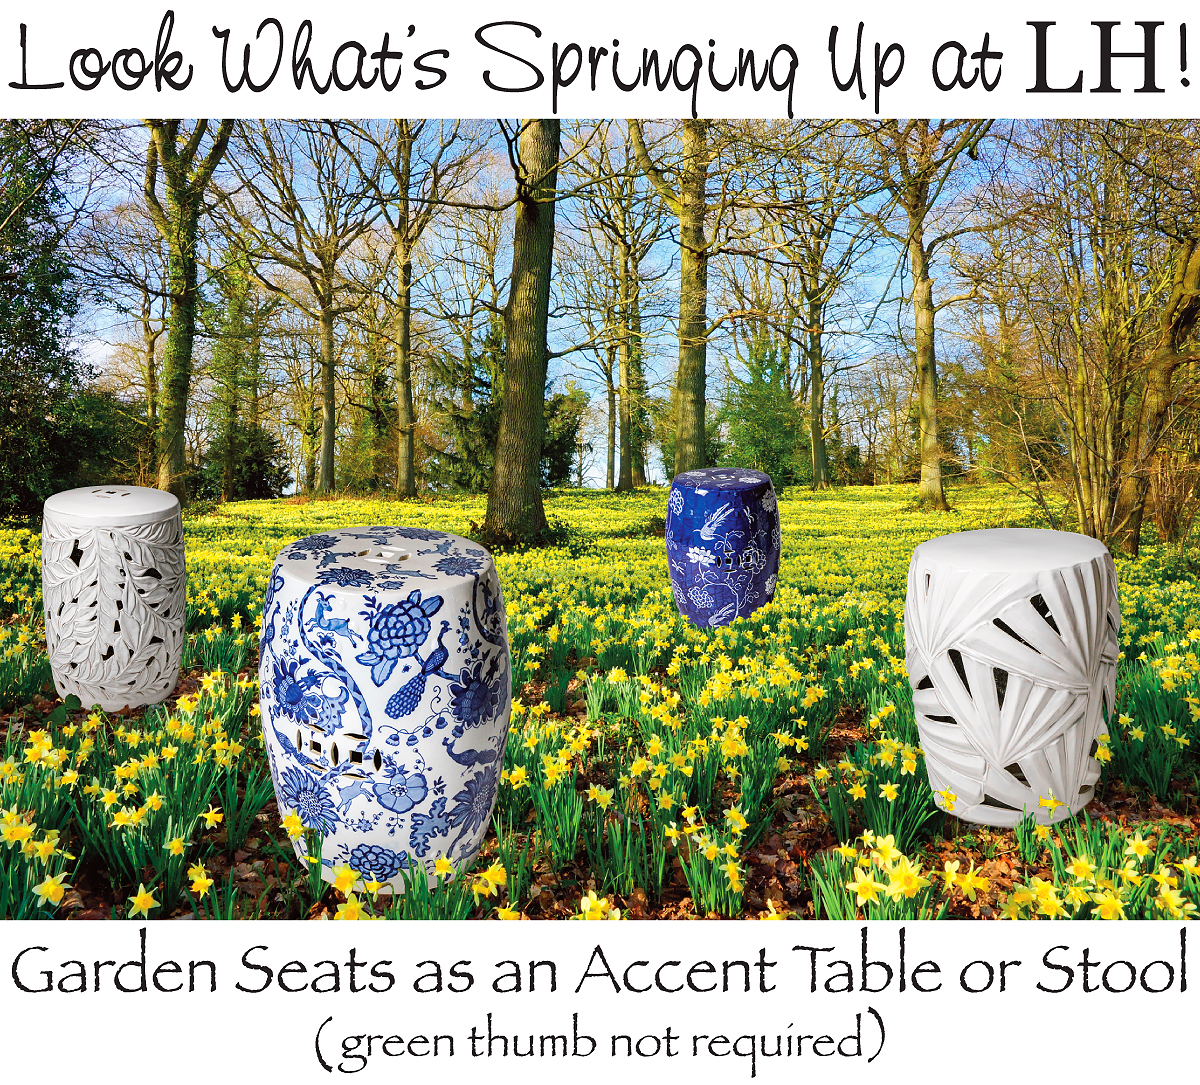 Garden Seats as an Accent Table or Stool